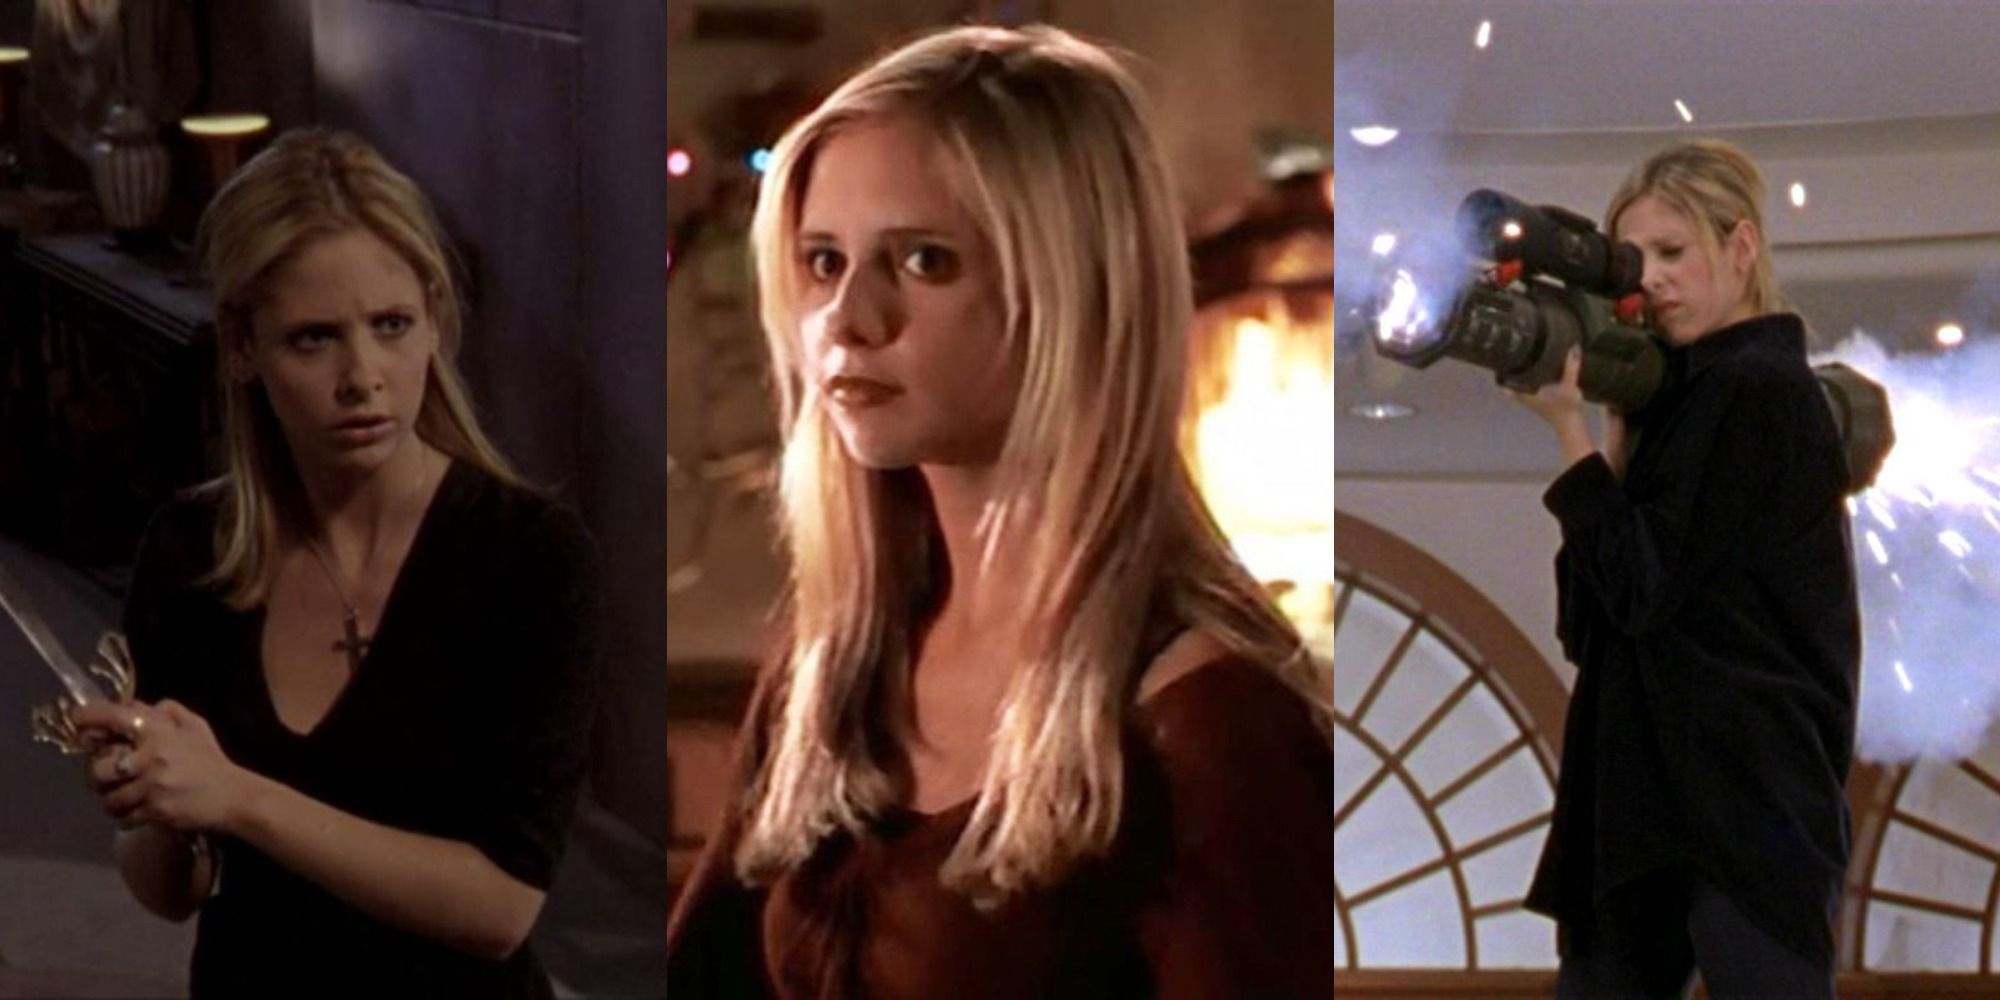 Split Image: Buffy holding a sword, Buffy surrounded by warm lighting, Buffy holding a bazooka